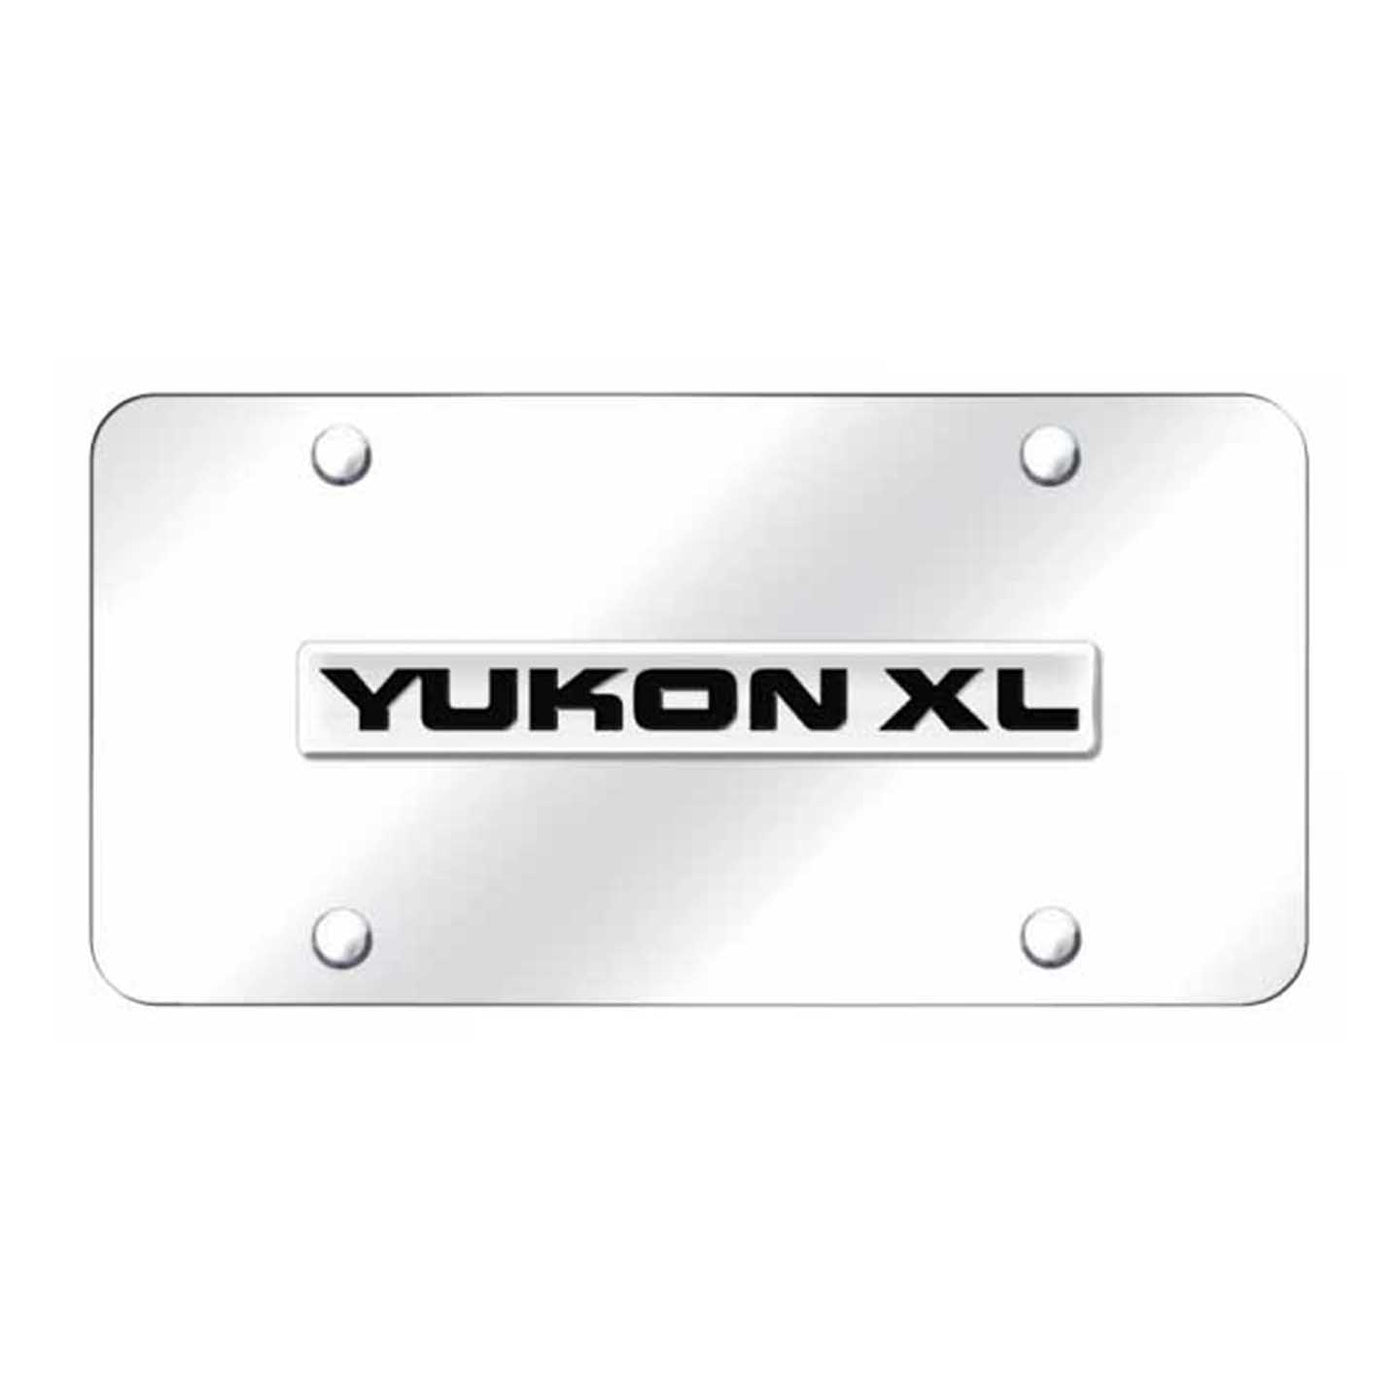 Yukon XL Name License Plate - Chrome on Mirrored